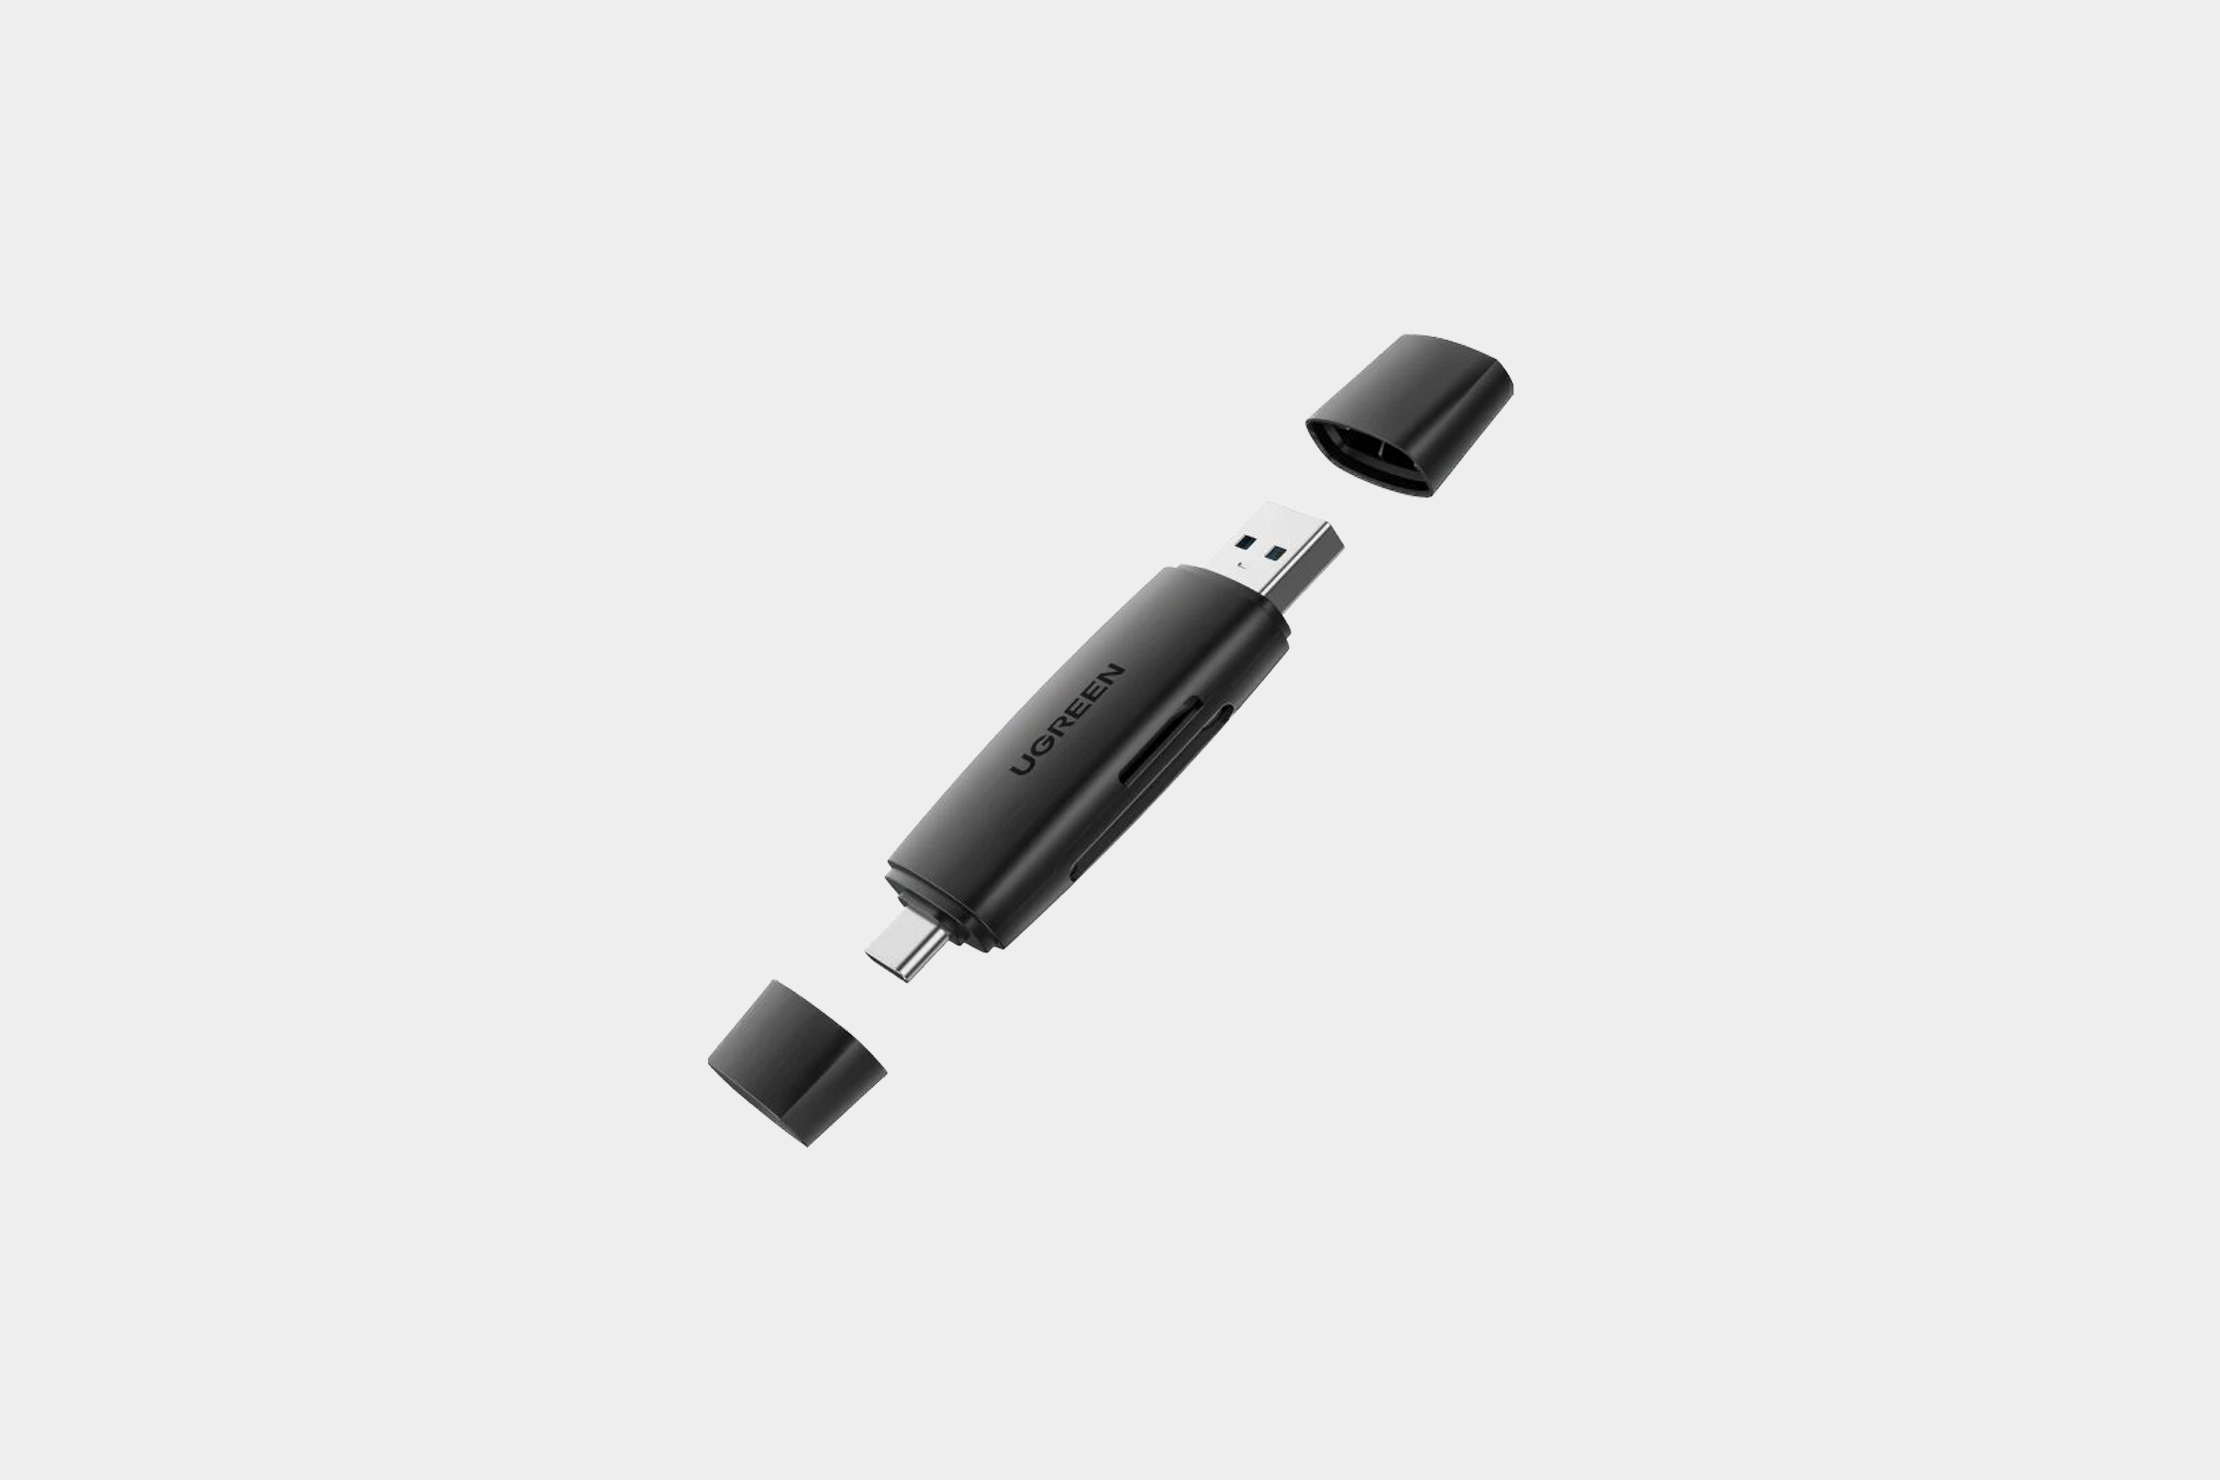 Ugreen 2 in 1 USB SD Card Reader – UGREEN